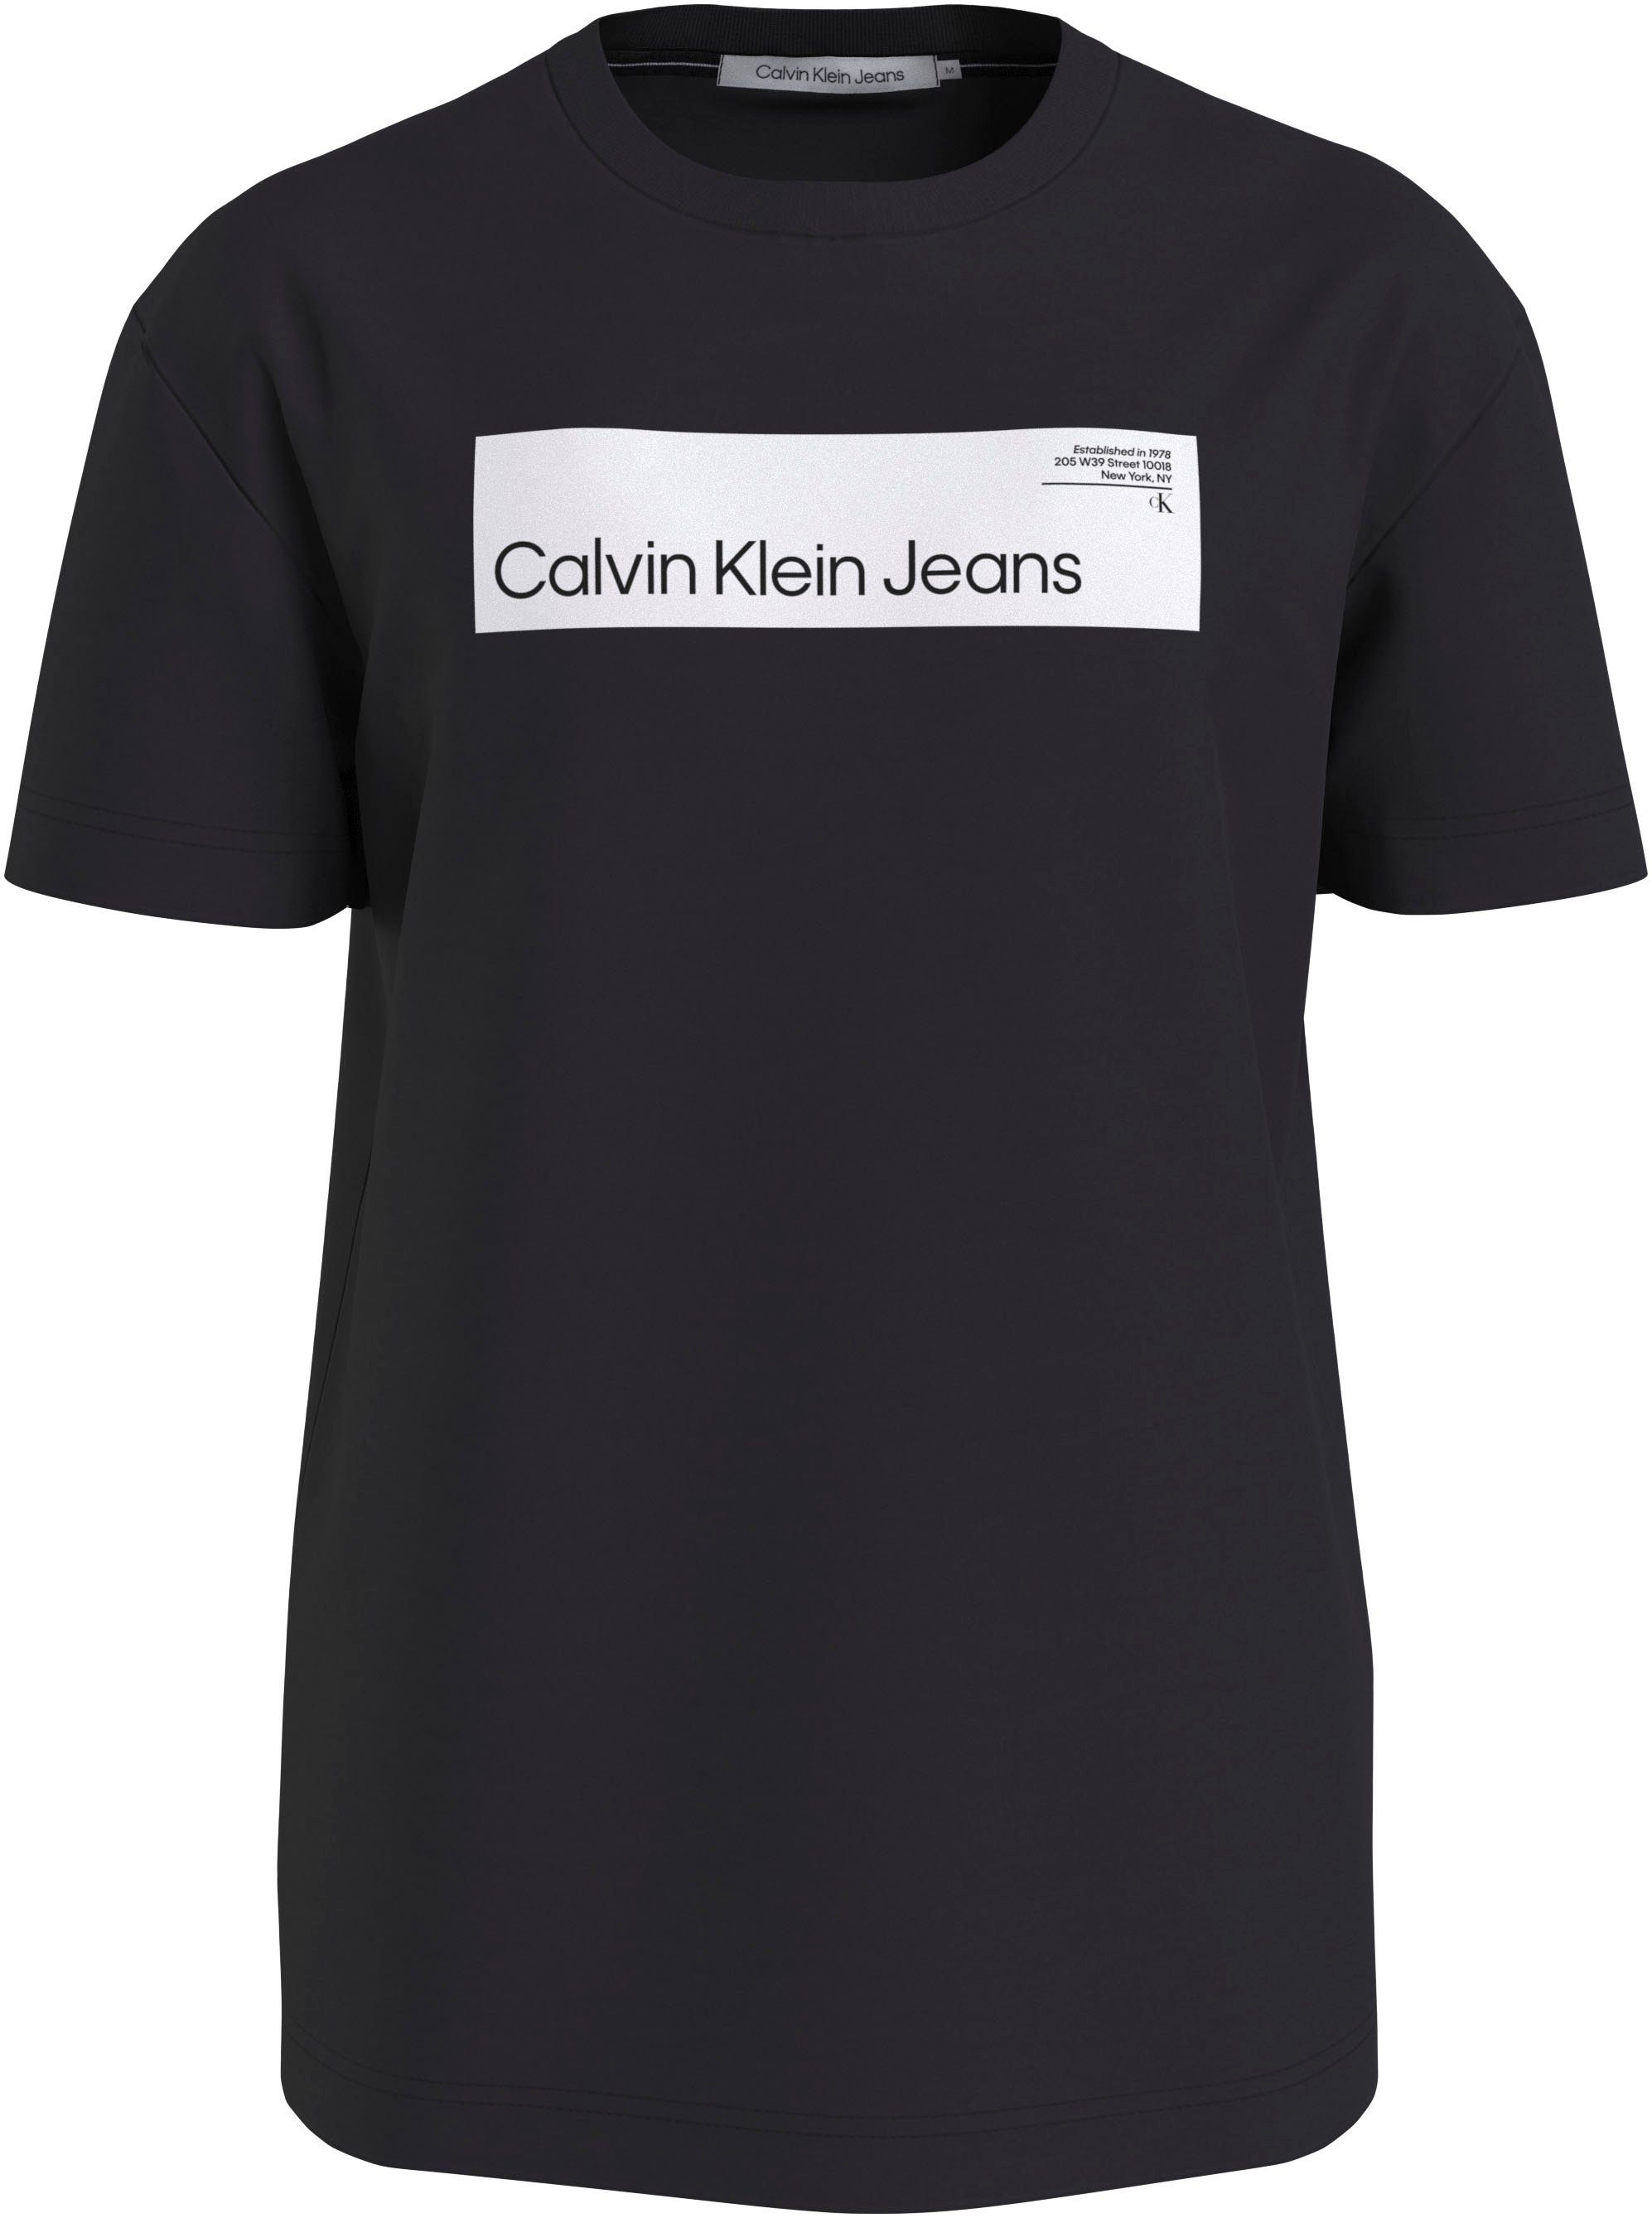 TEE Black Klein BOX Jeans HYPER LOGO Calvin REAL Ck T-Shirt